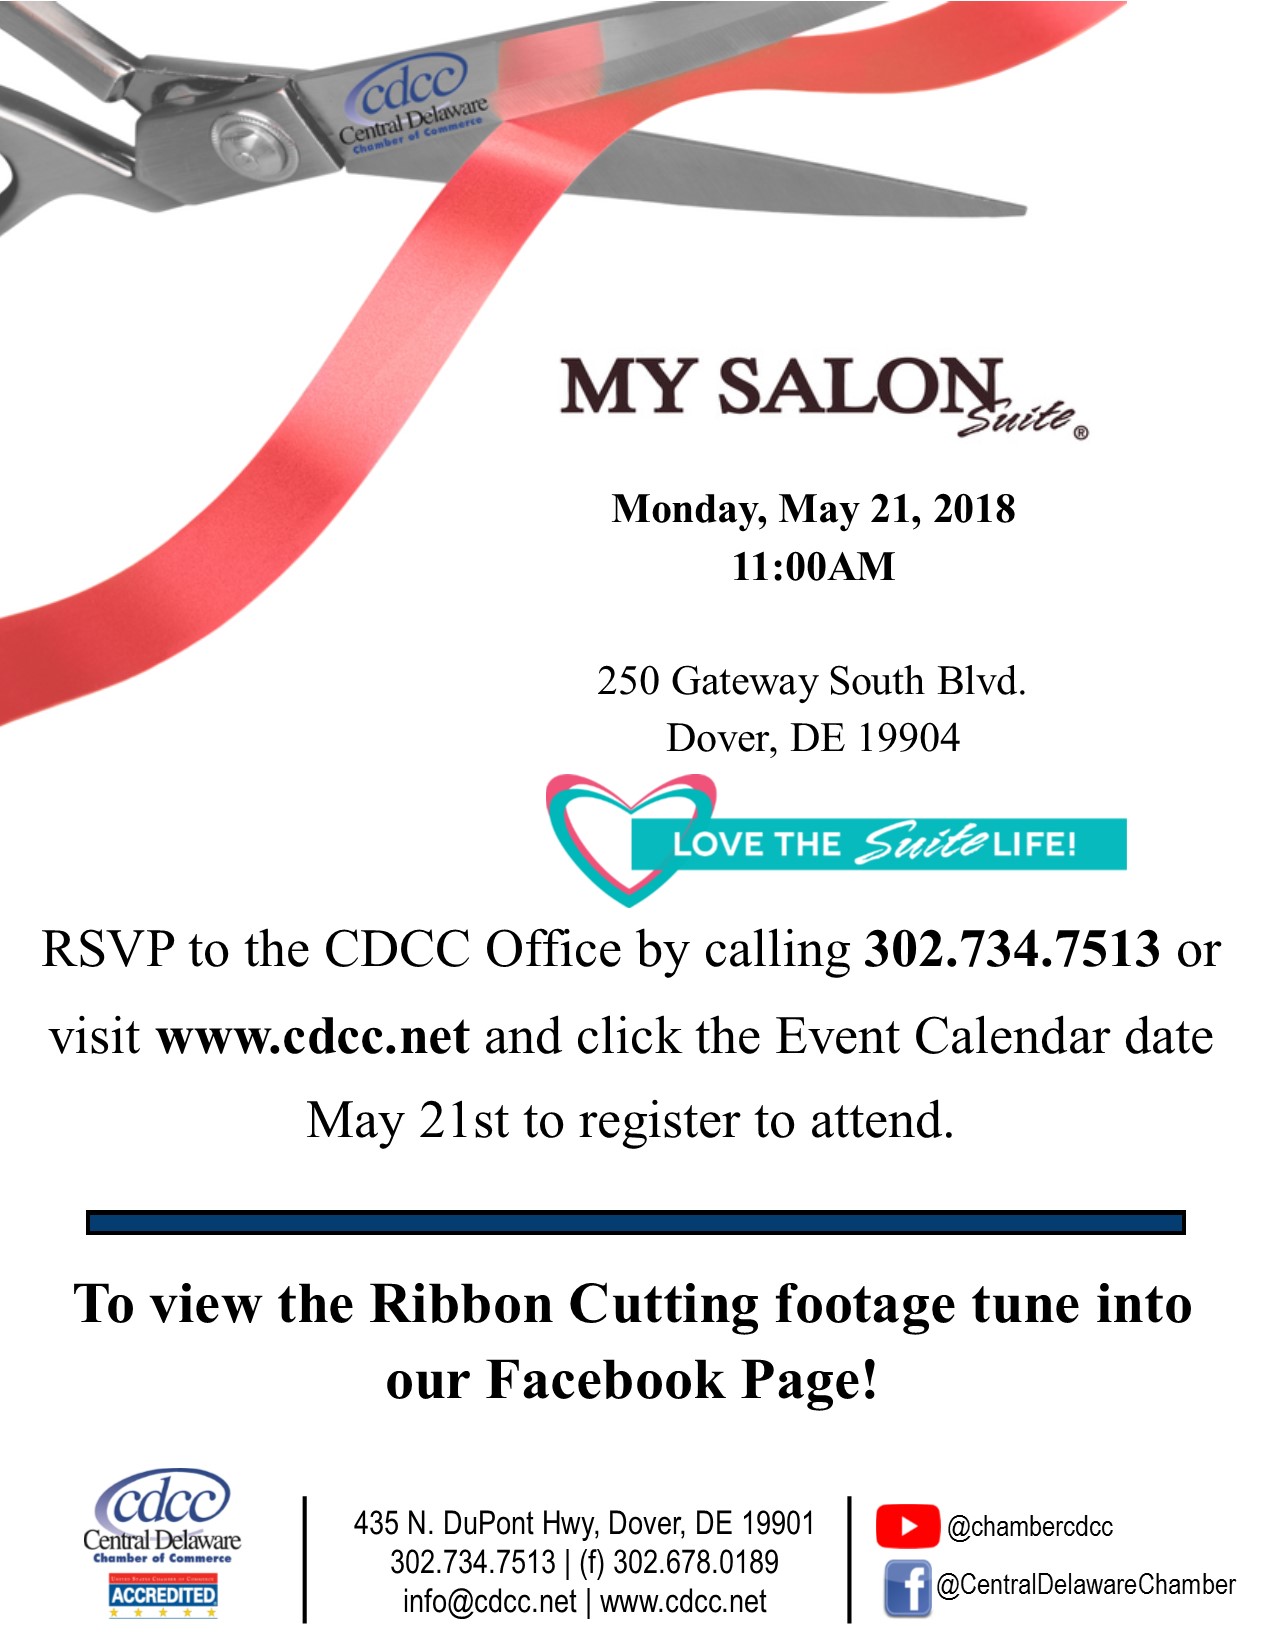 Ribbon Cutting - My Salon Suite